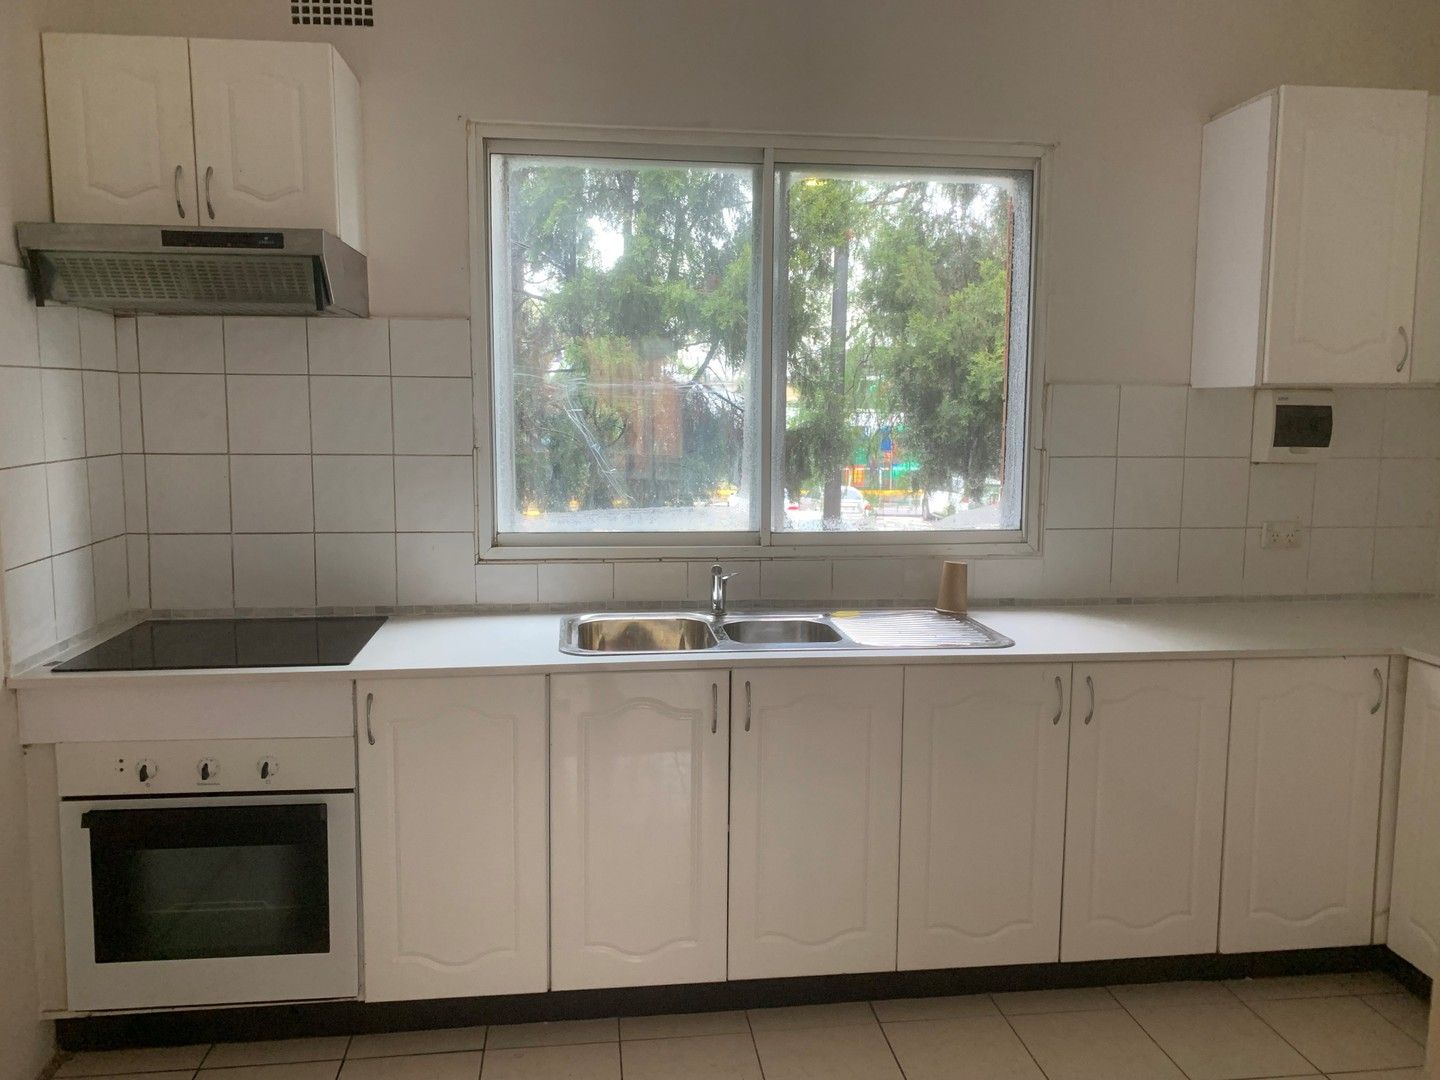 2 bedrooms Apartment / Unit / Flat in 2/111 Dartbrook Road AUBURN NSW, 2144